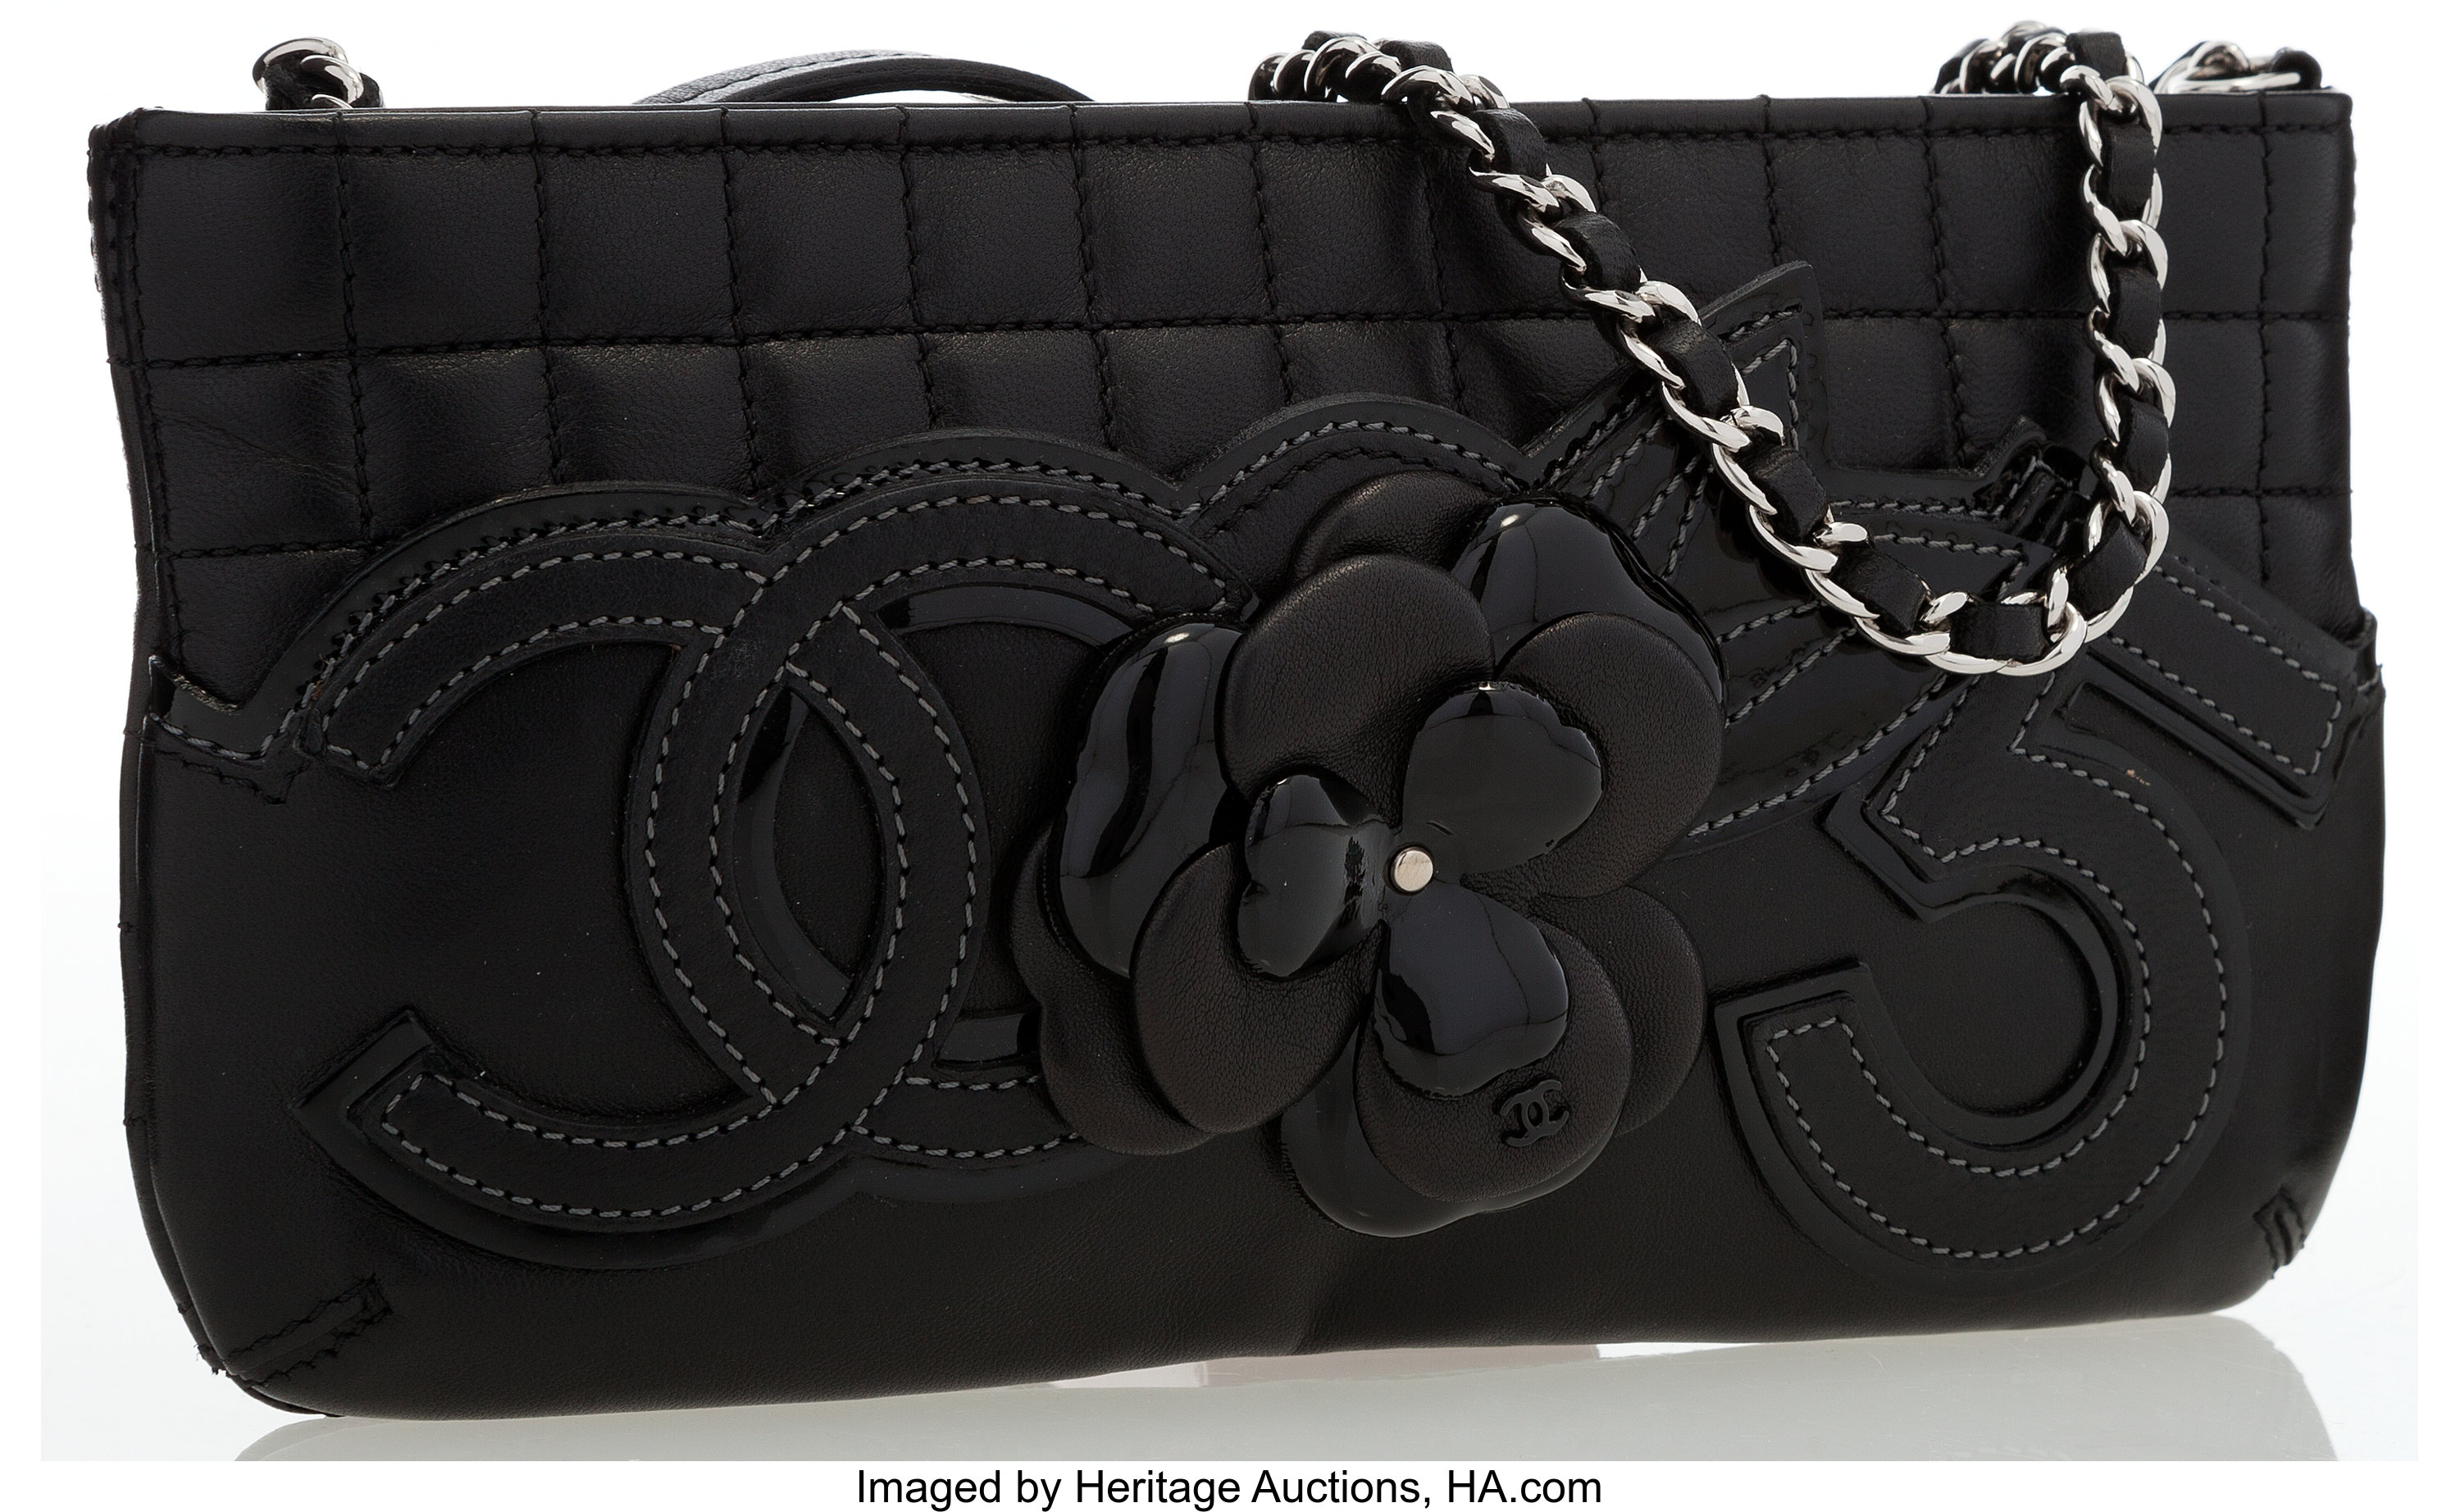 Chanel No. 5 Camellia Pochette Bag